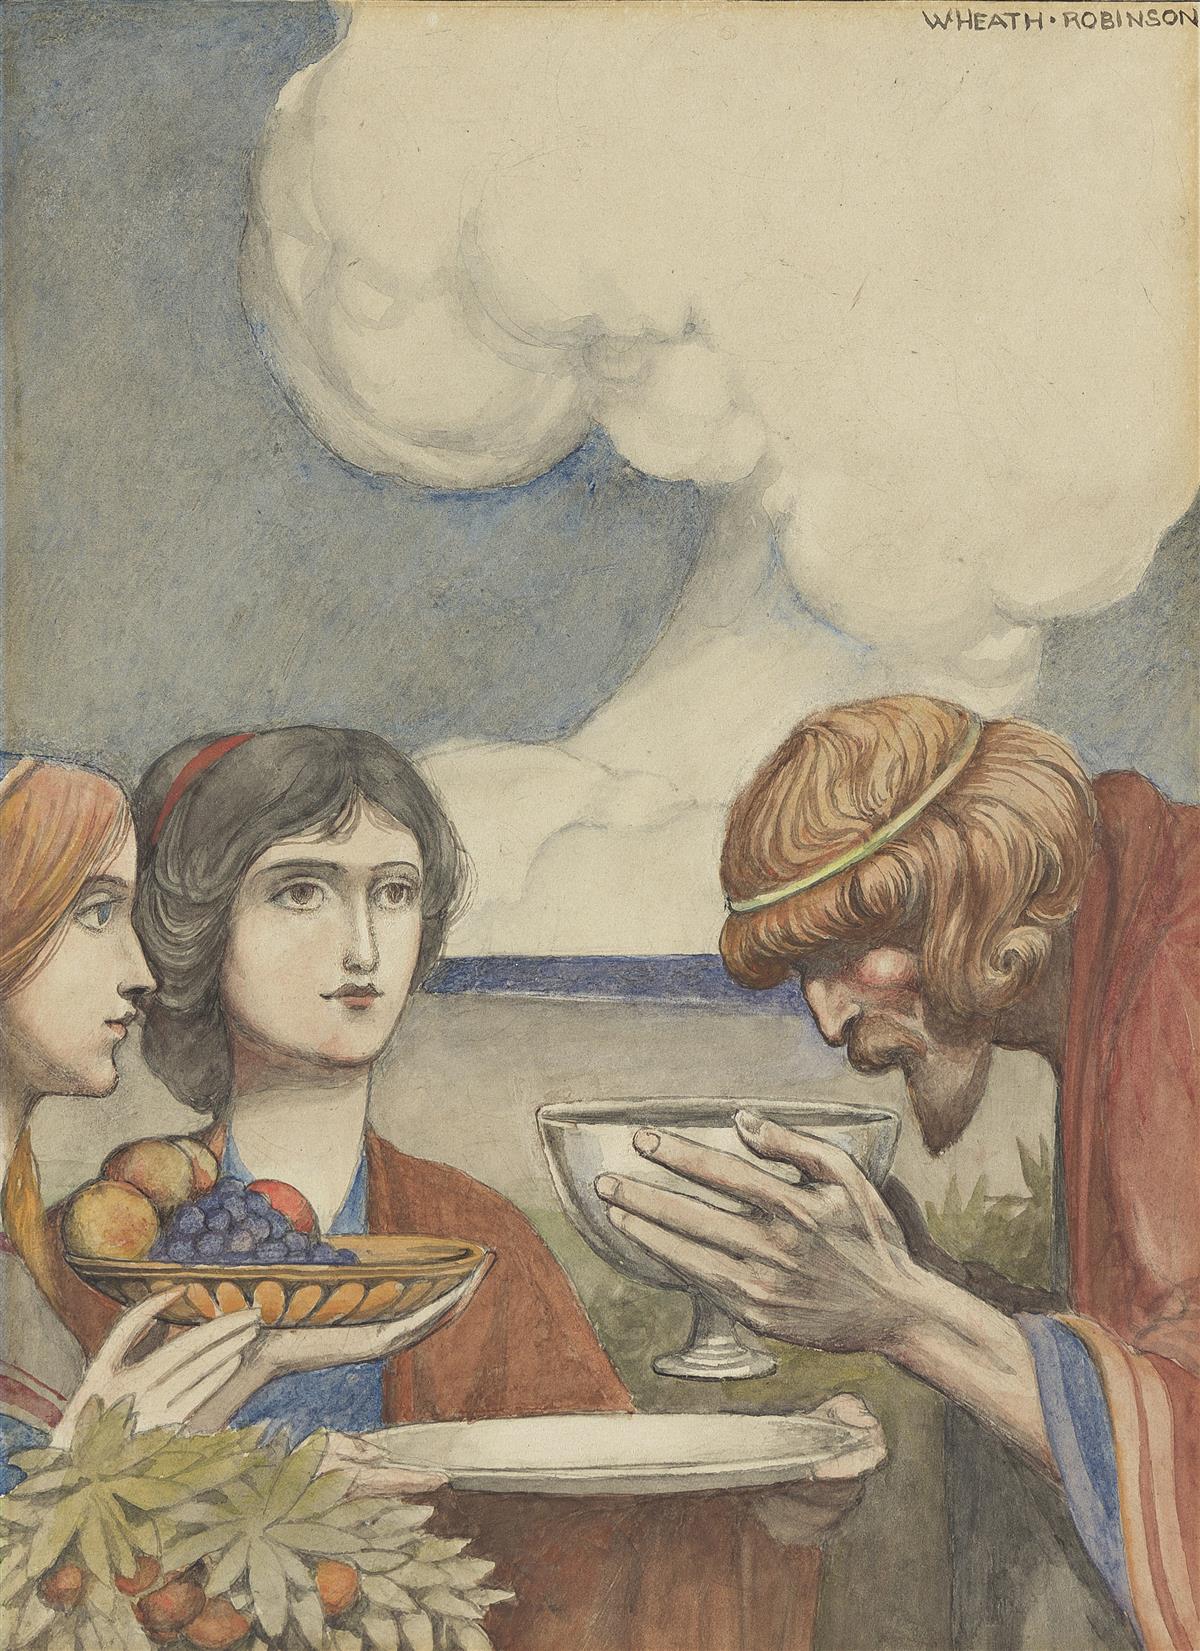 WILLIAM HEATH ROBINSON (1872-1944) Nausicaa and her maidens brought him food and wine.